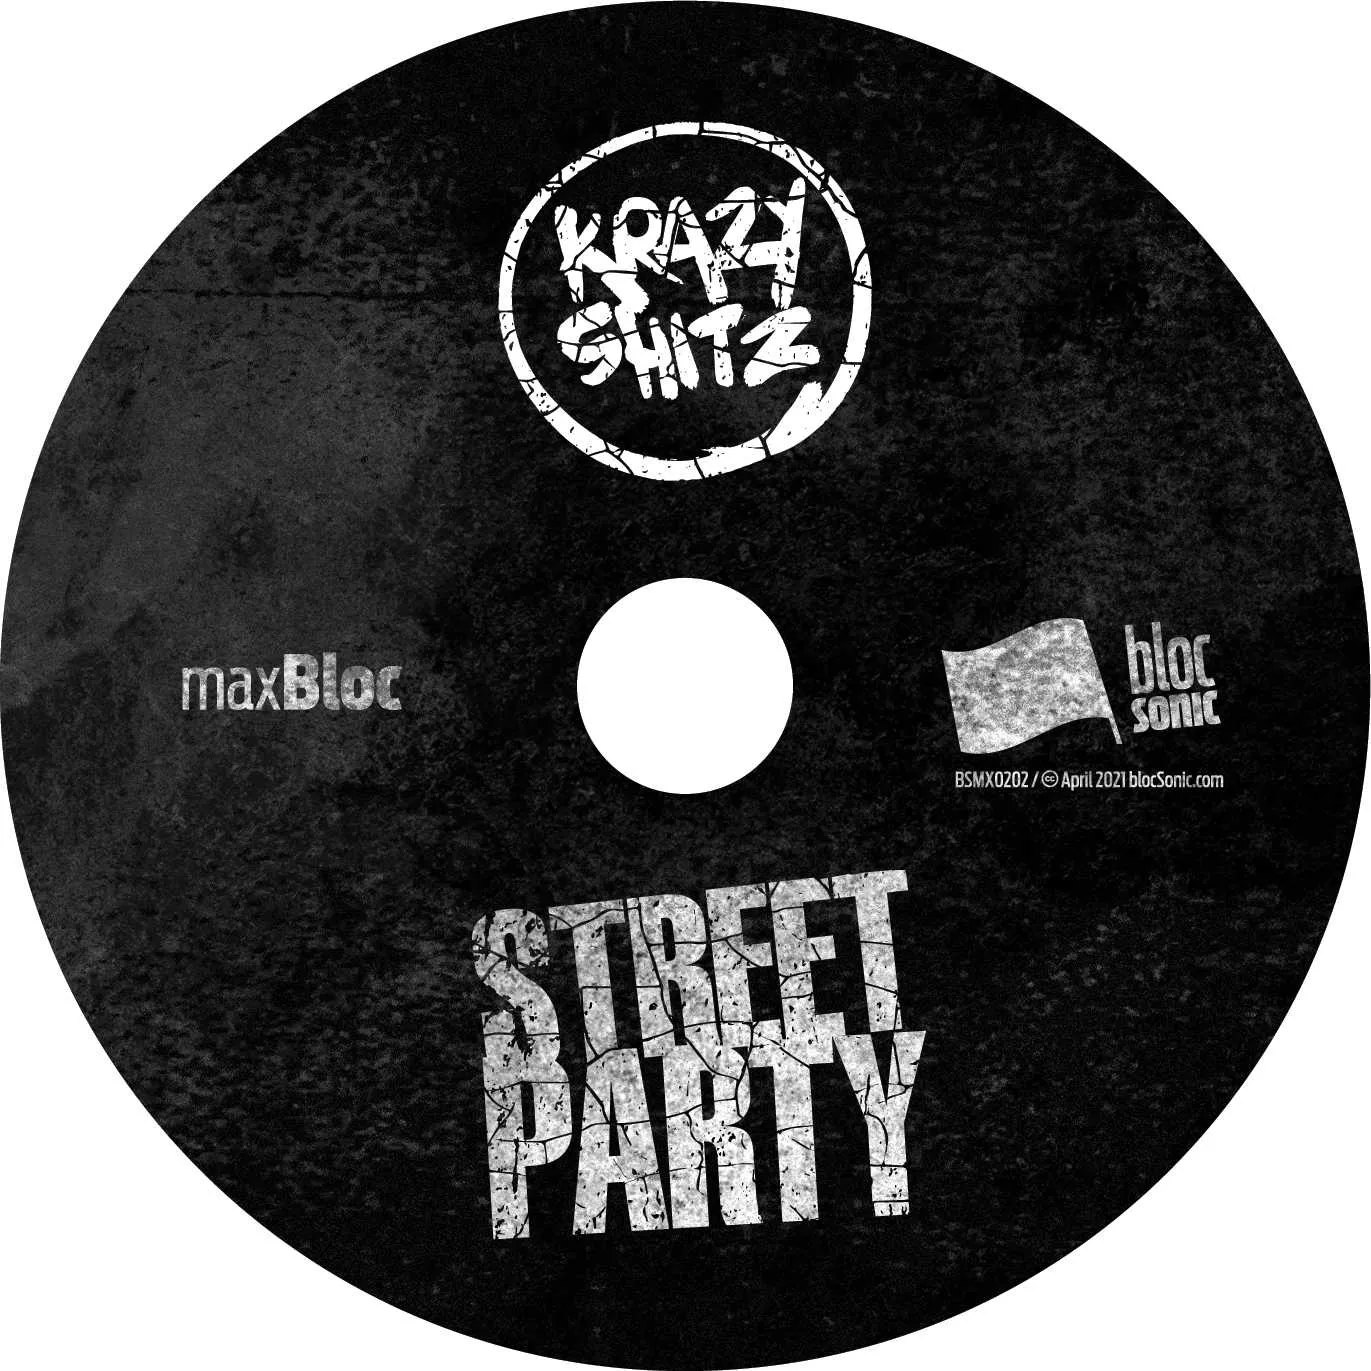 Album disc for “Street Party” by Krazy Shitz